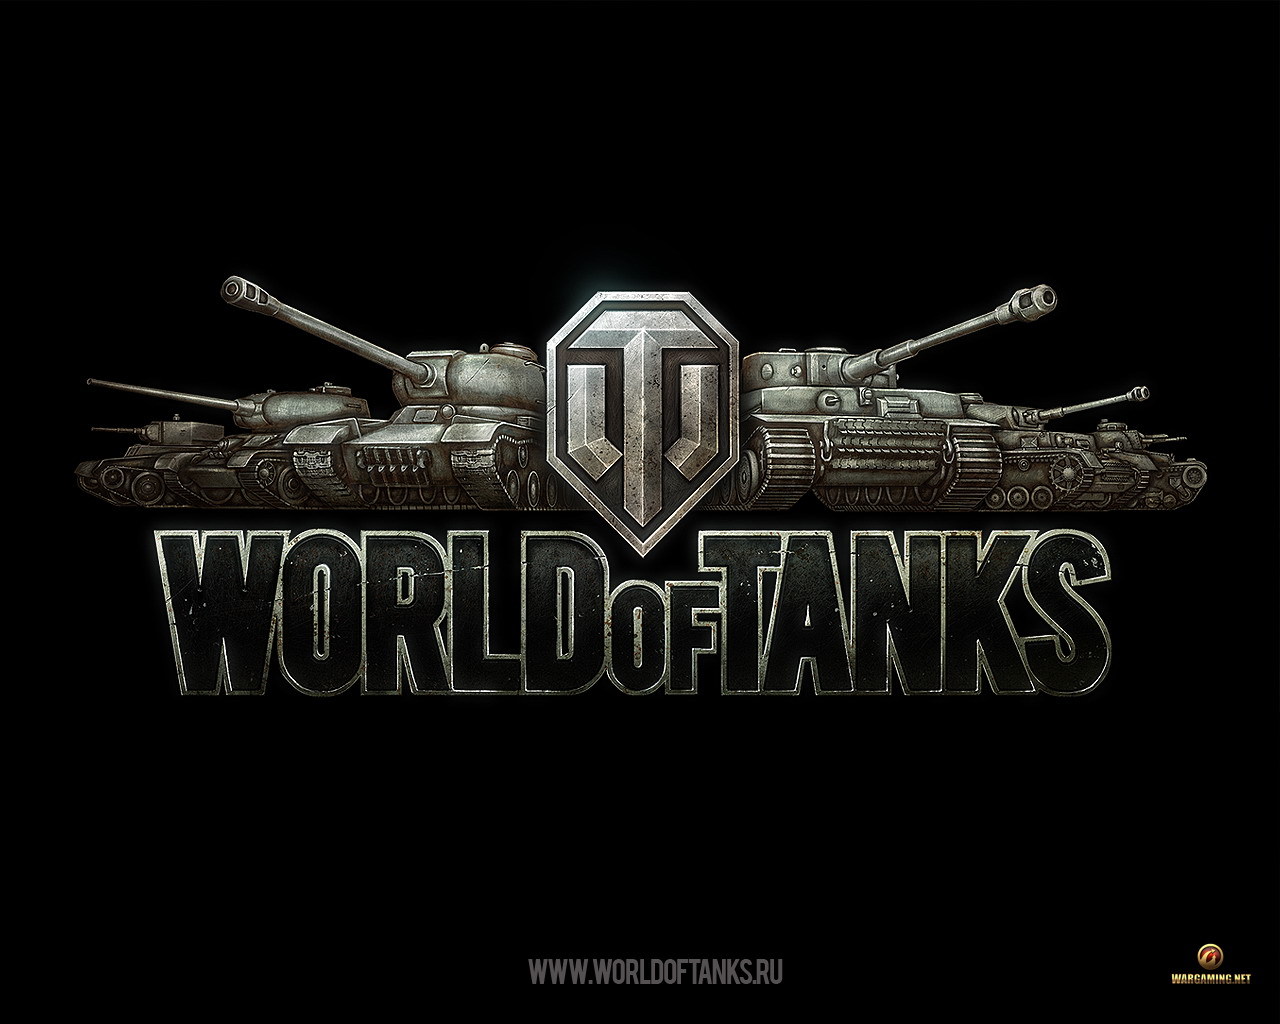 world of tanks, games, background, logos, black cellphone